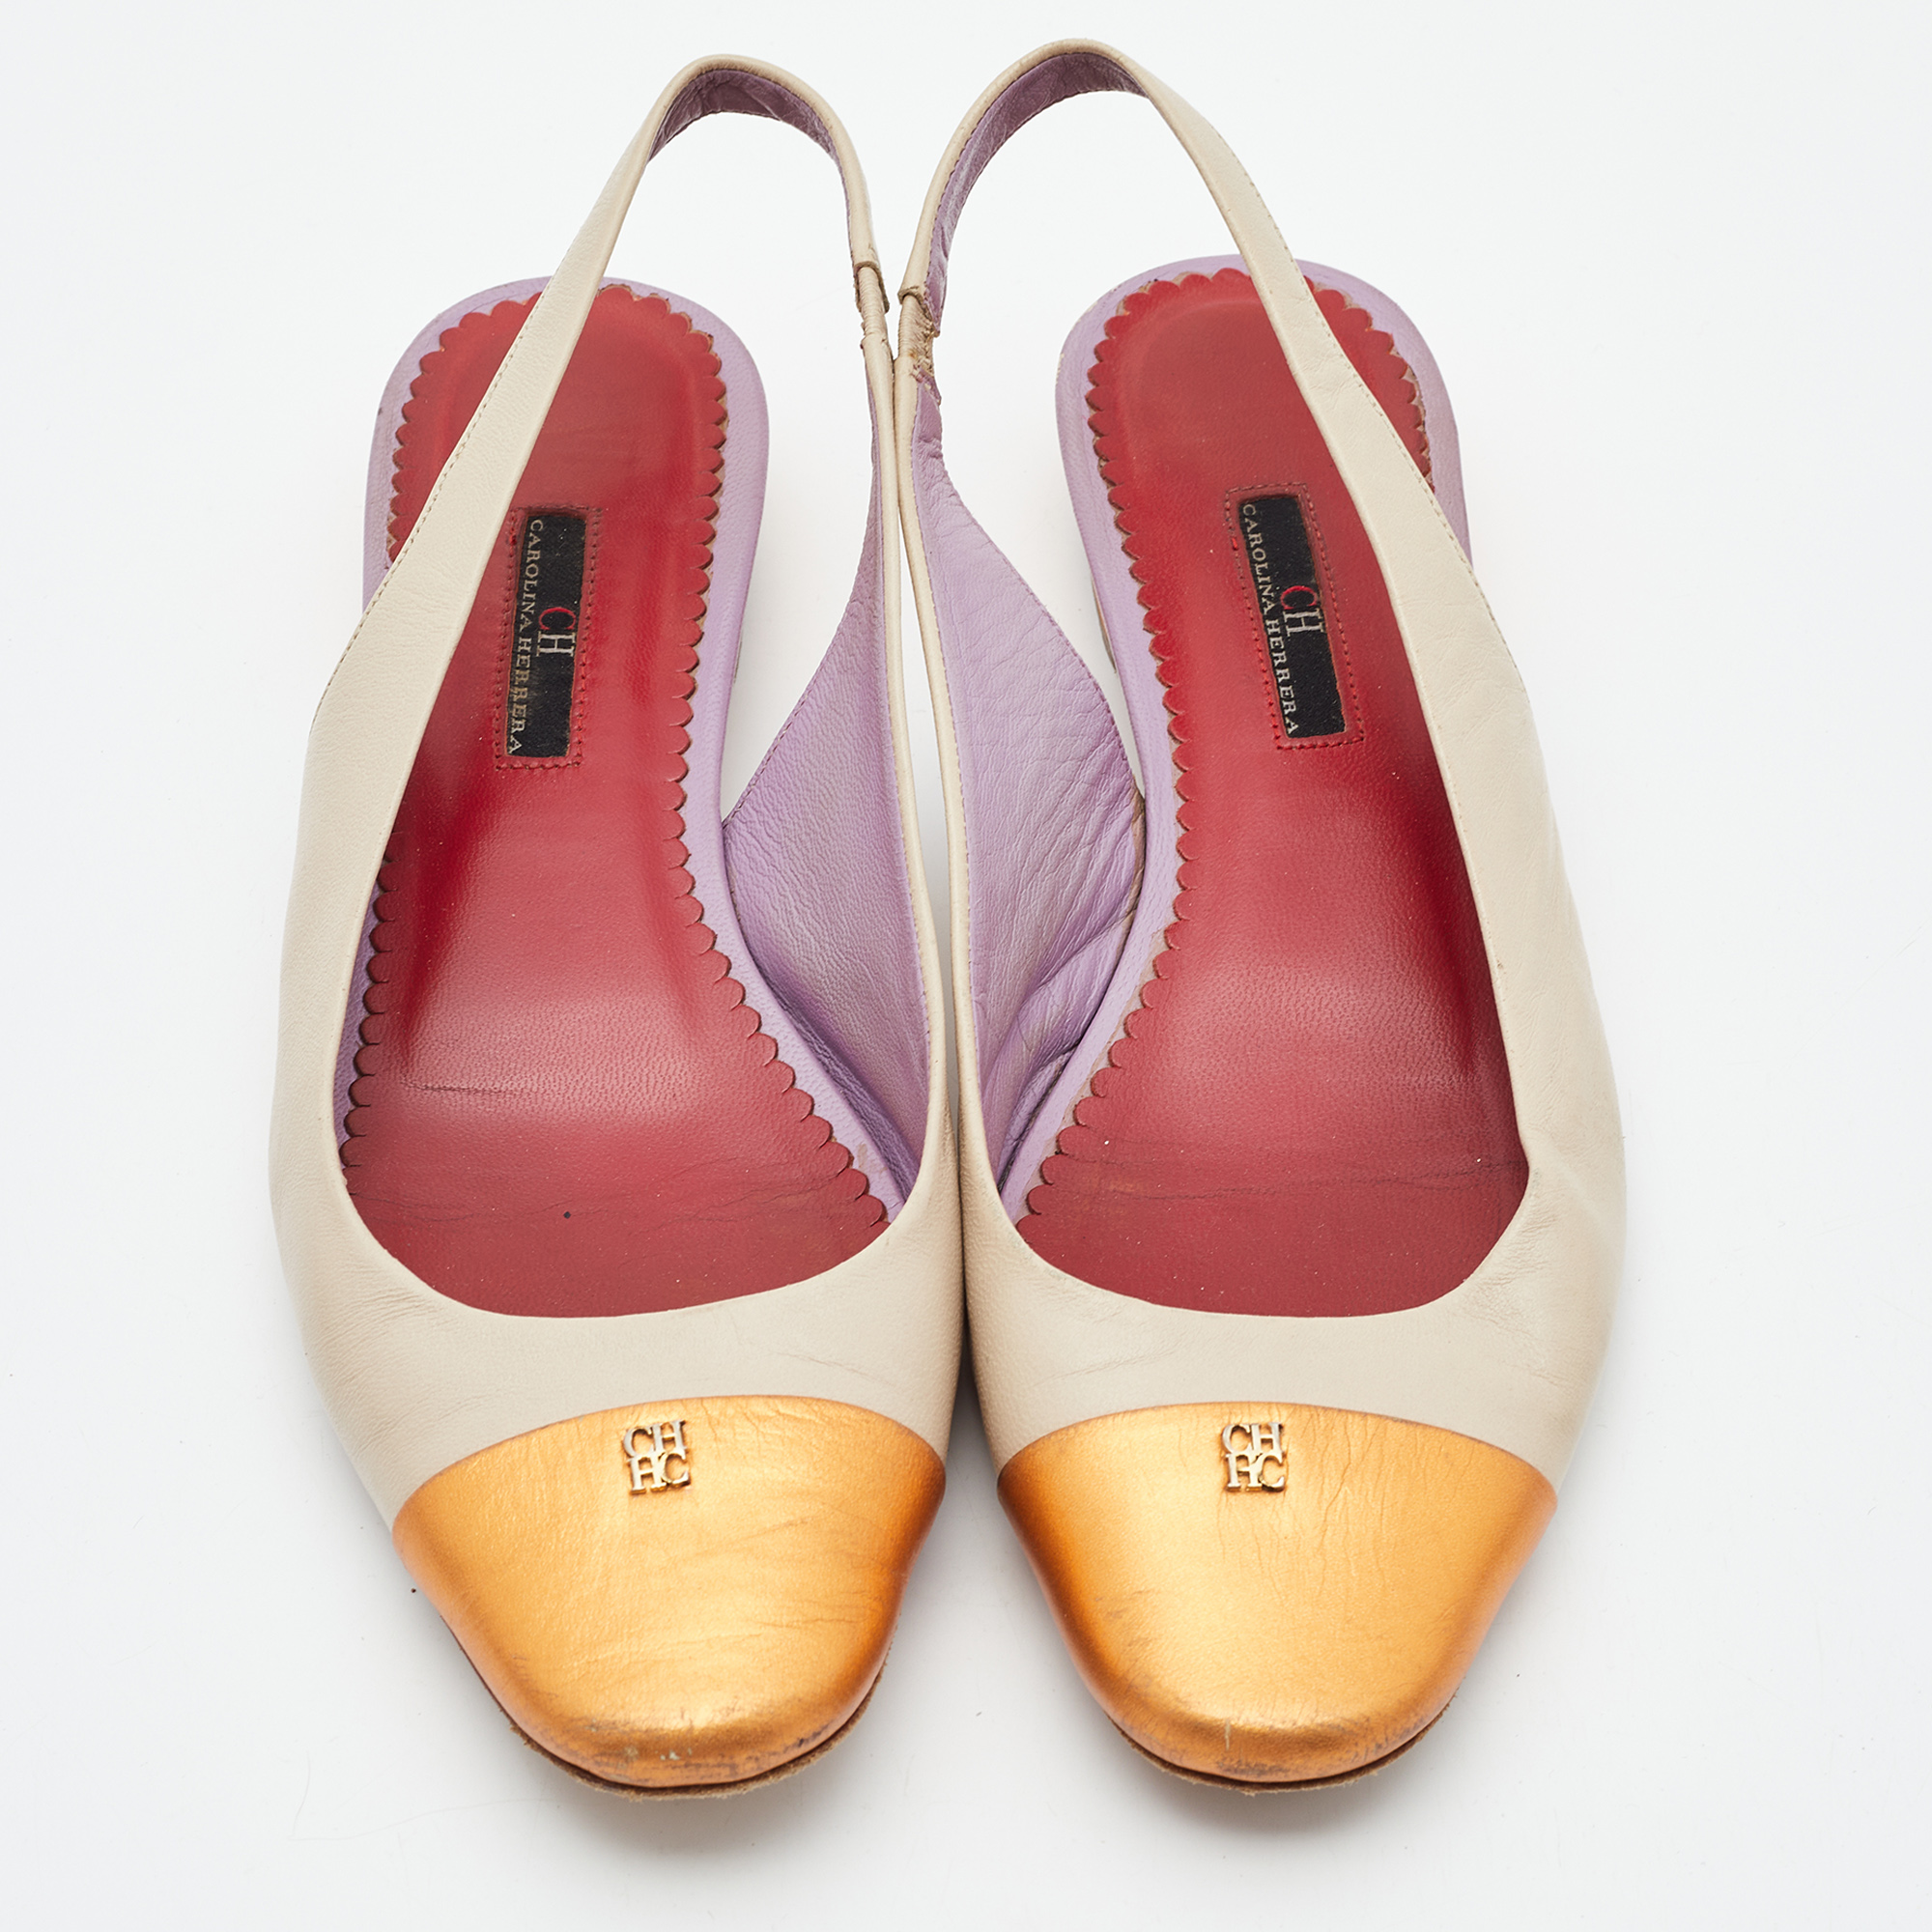 CH Carolina Herrera Cream/Orange Leather Round Toe Slingback Pumps Size 39